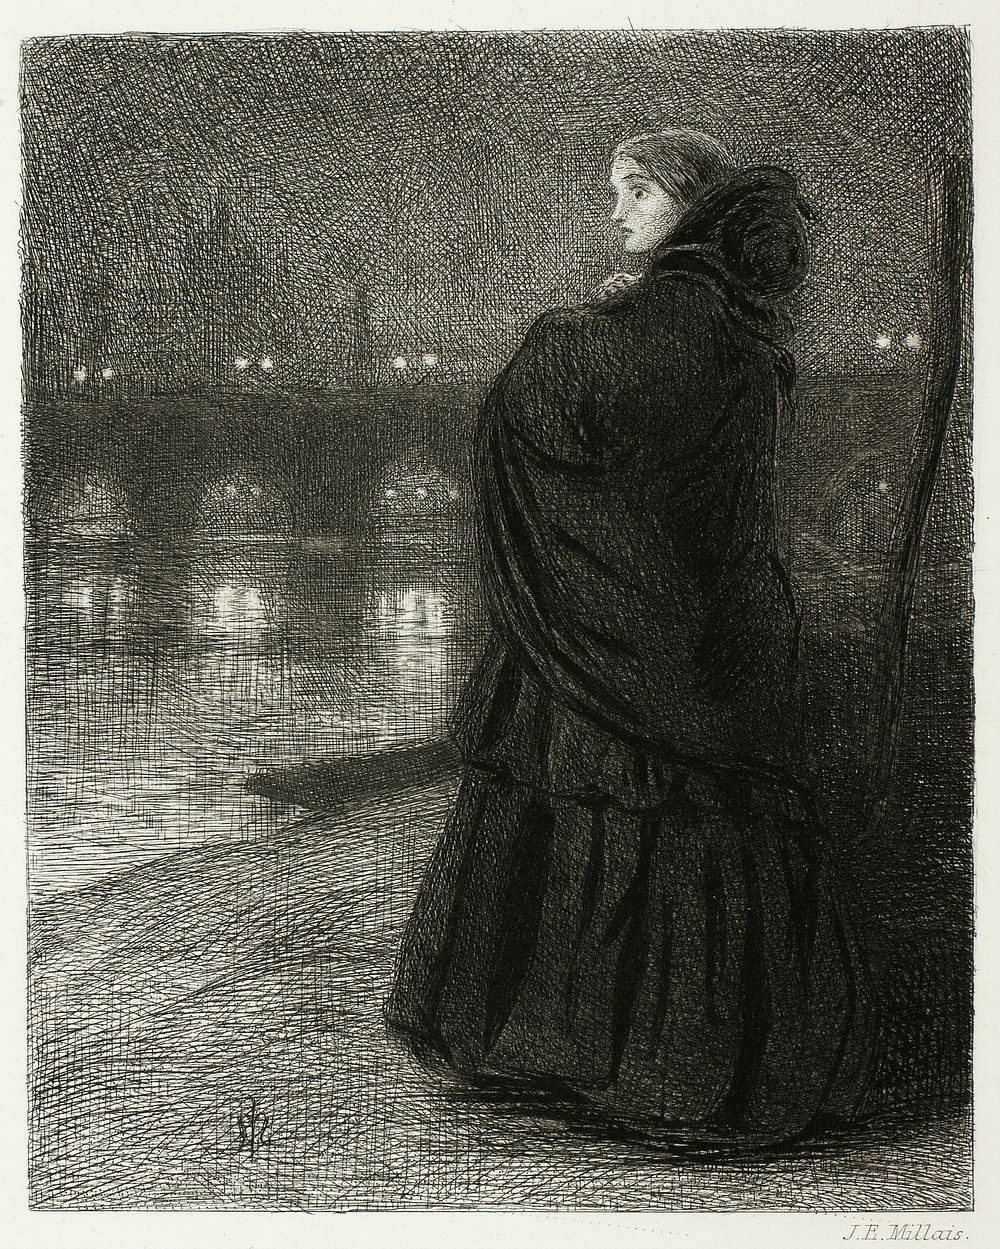 Bridge of Sighs by Sir John Everett Millais